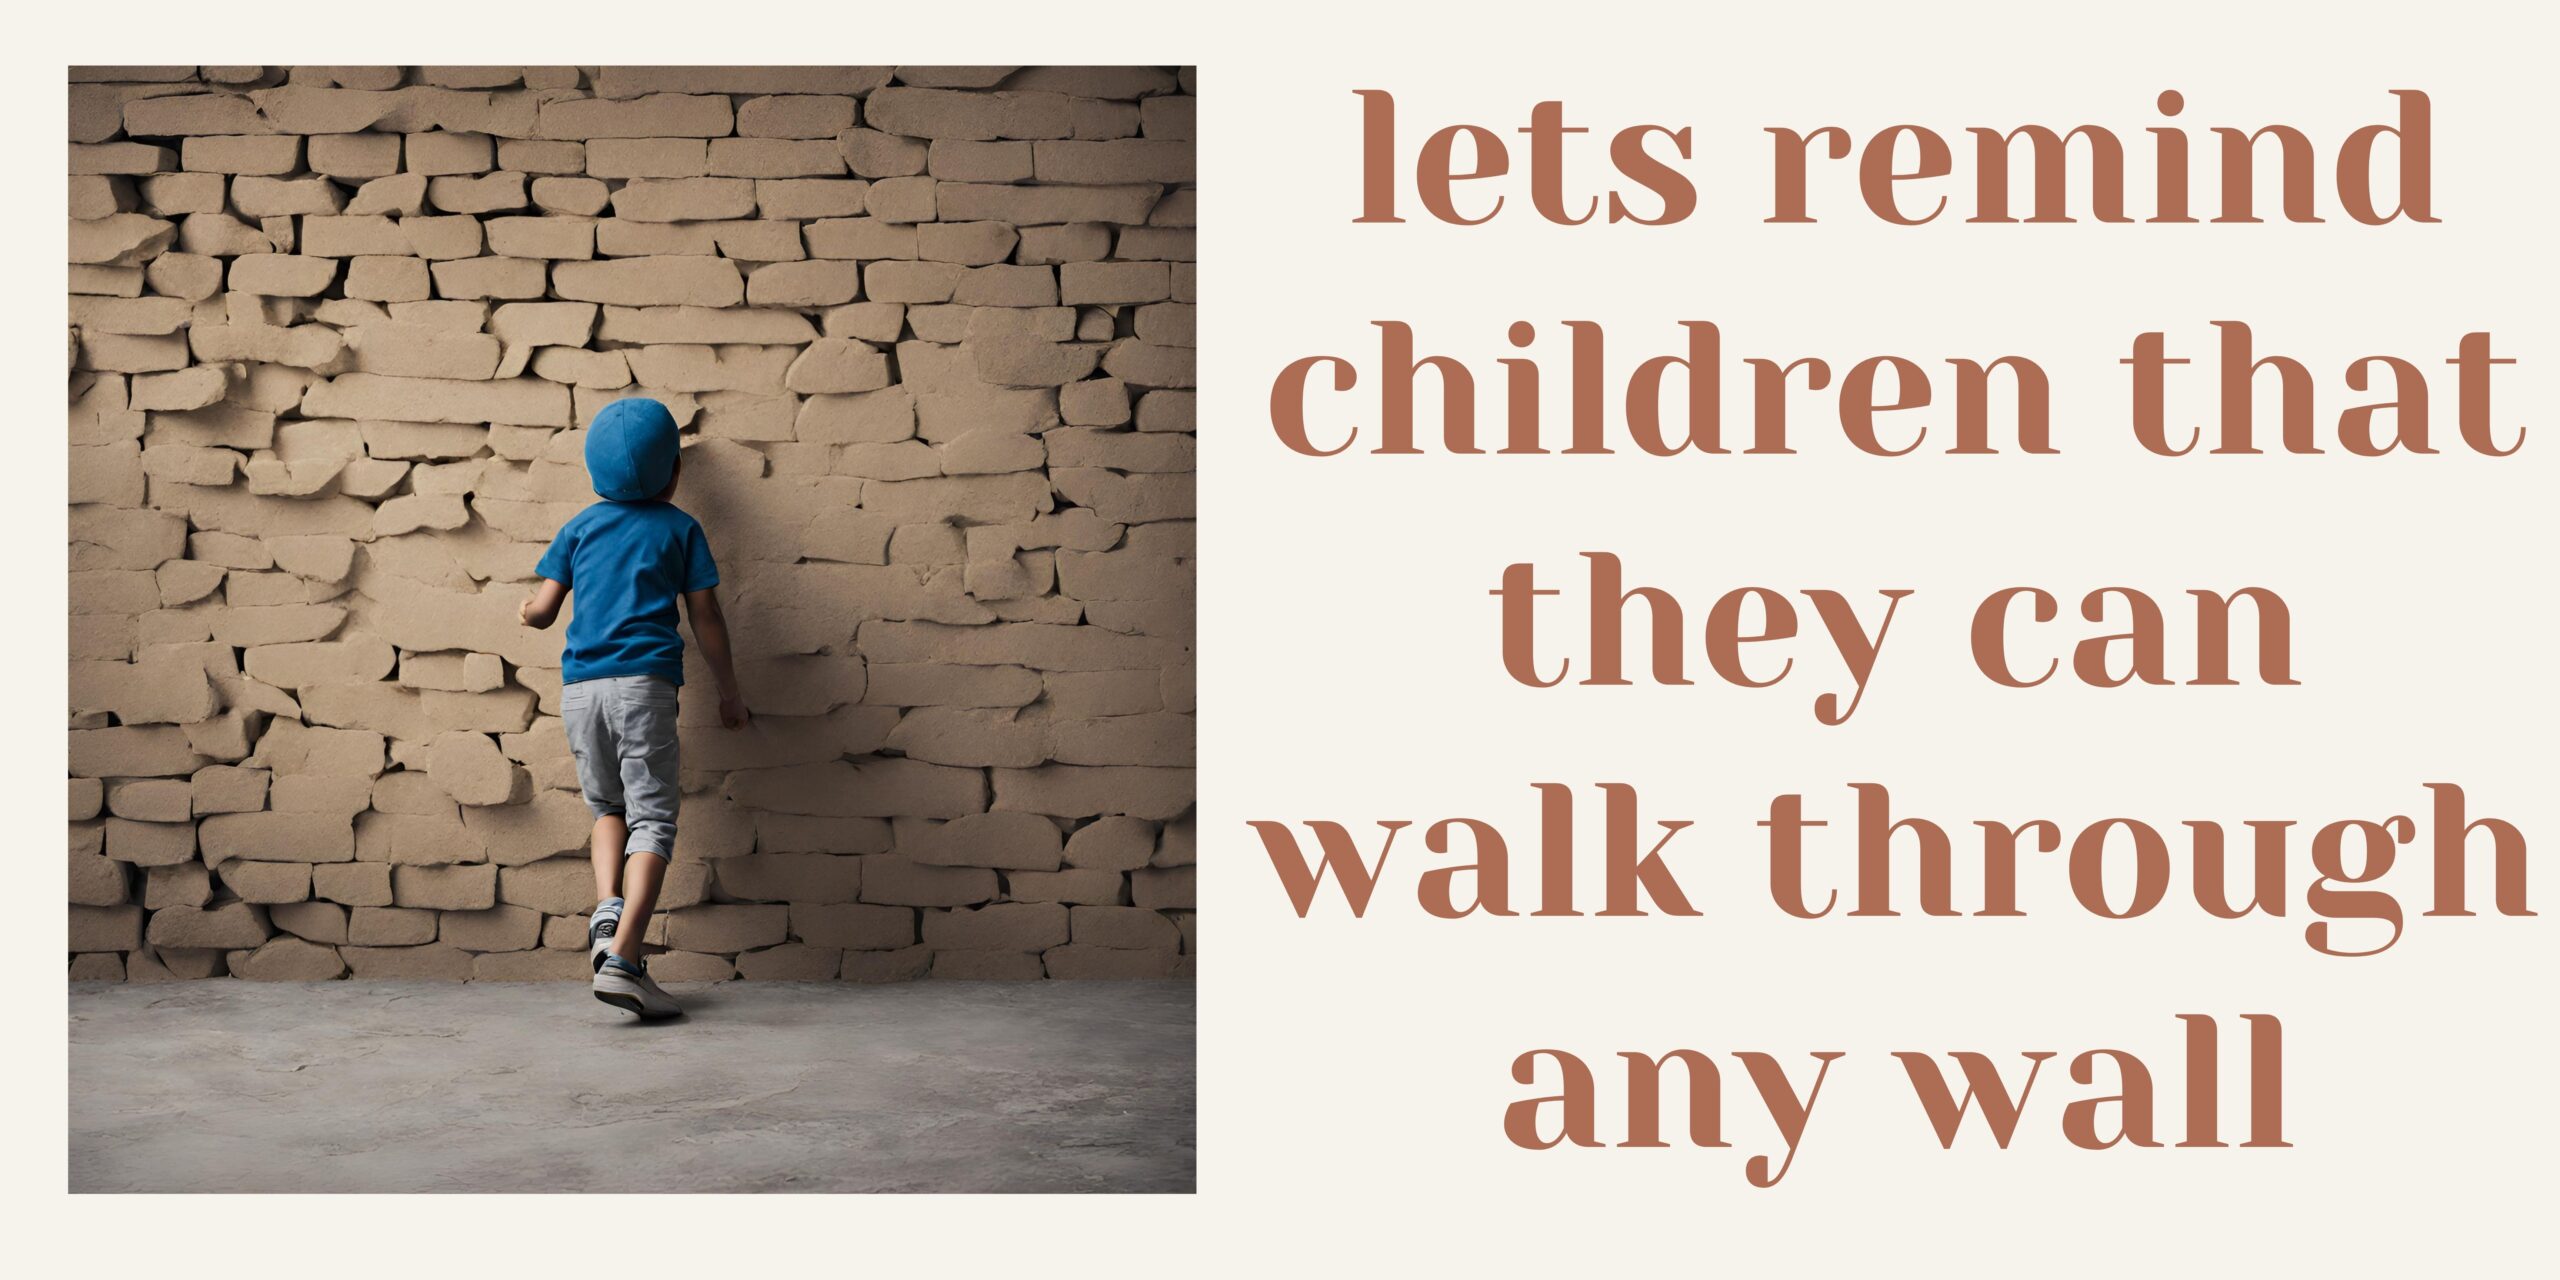 Children too can walk through walls